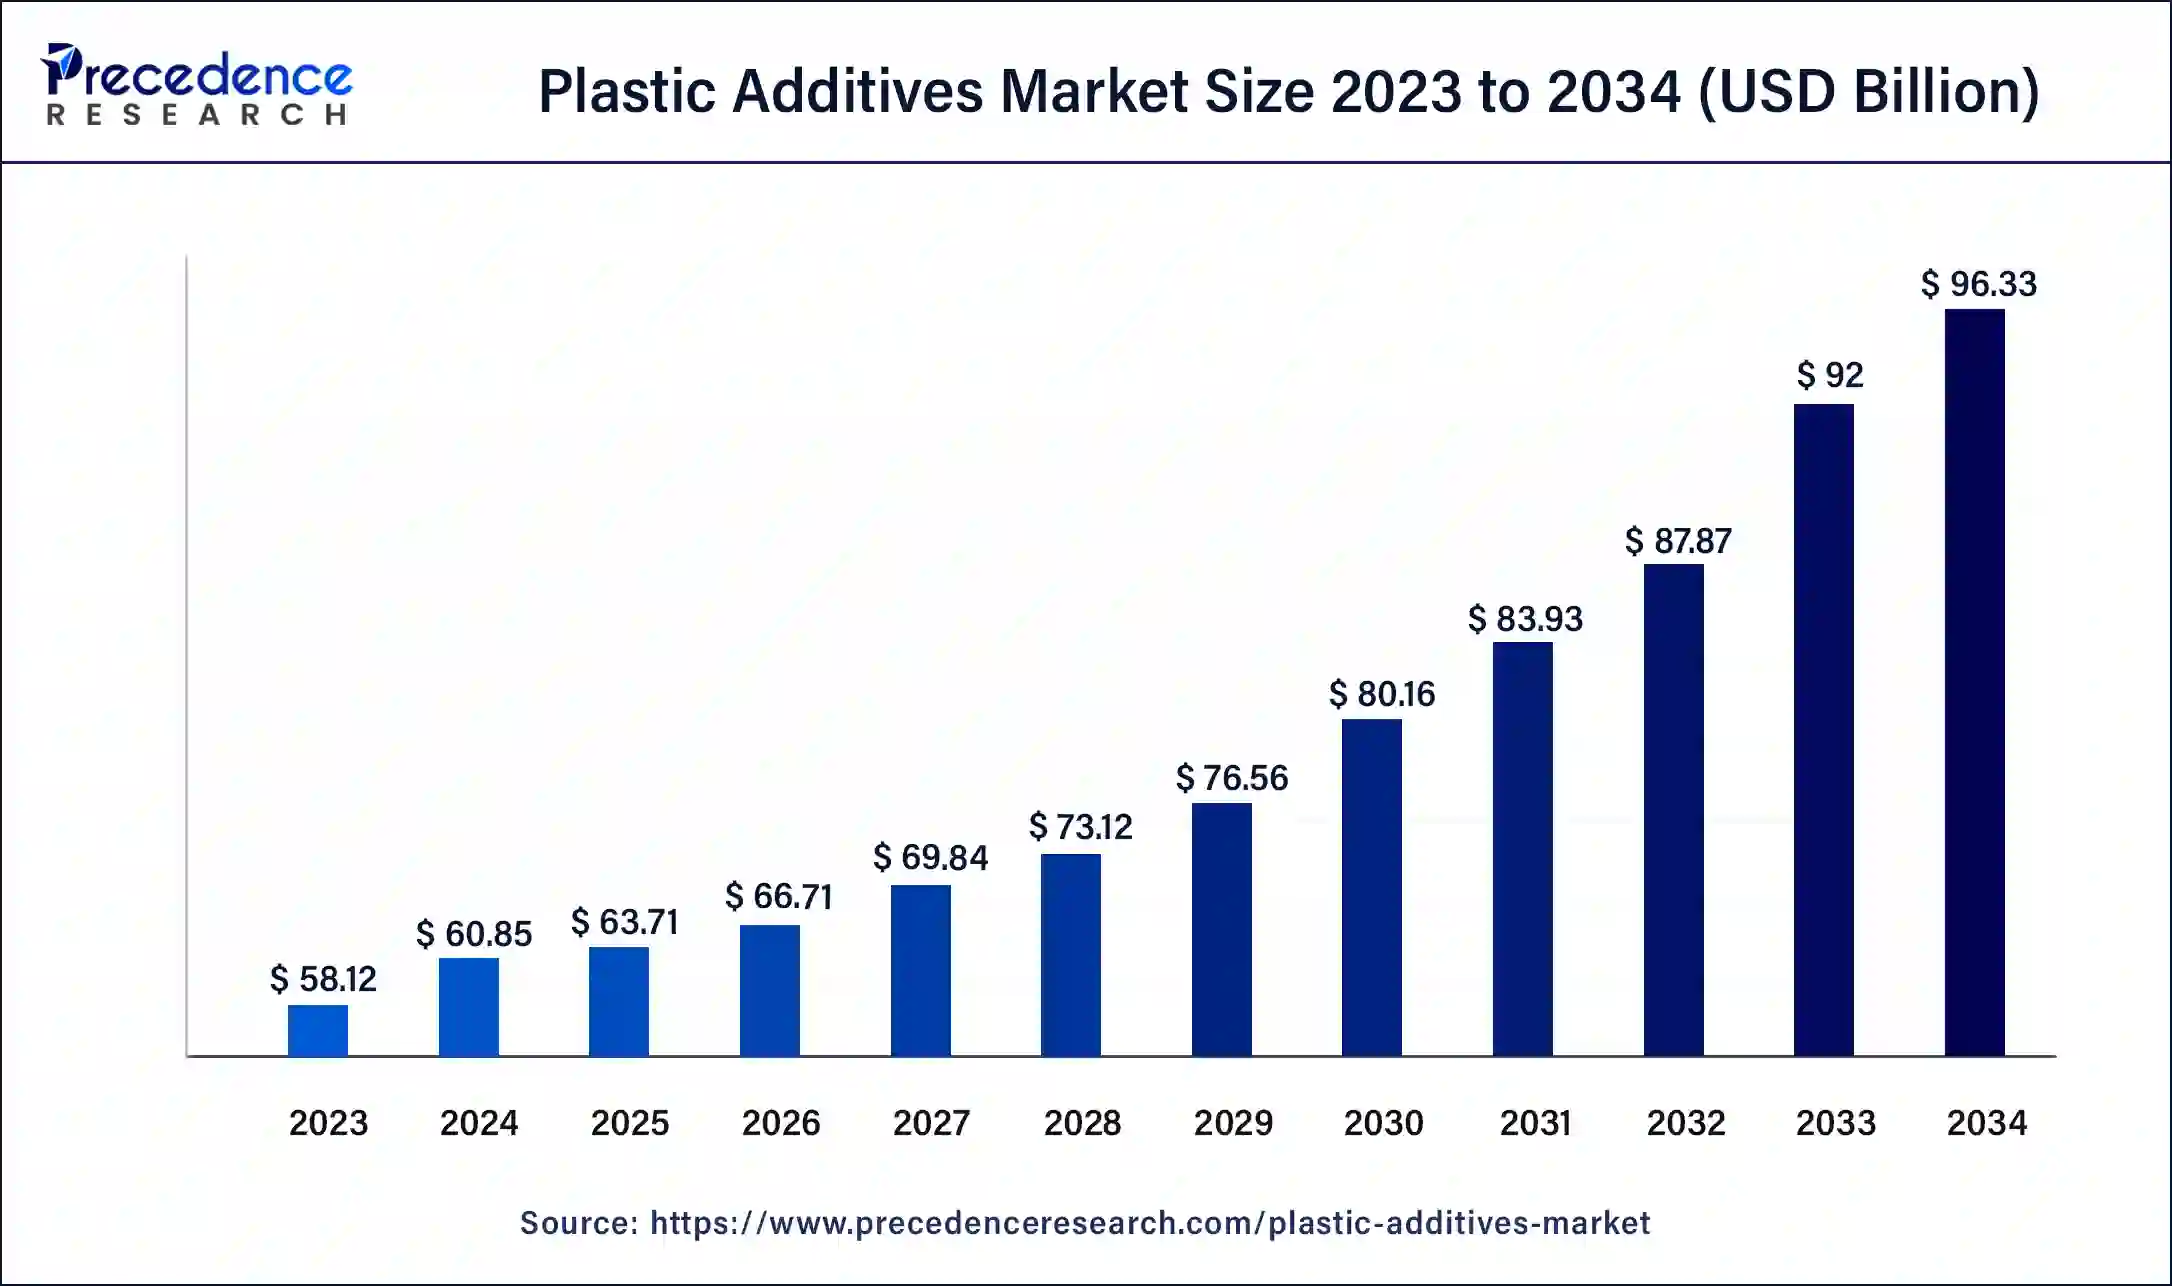 Plastic Additives Market Size 2024 to 2034